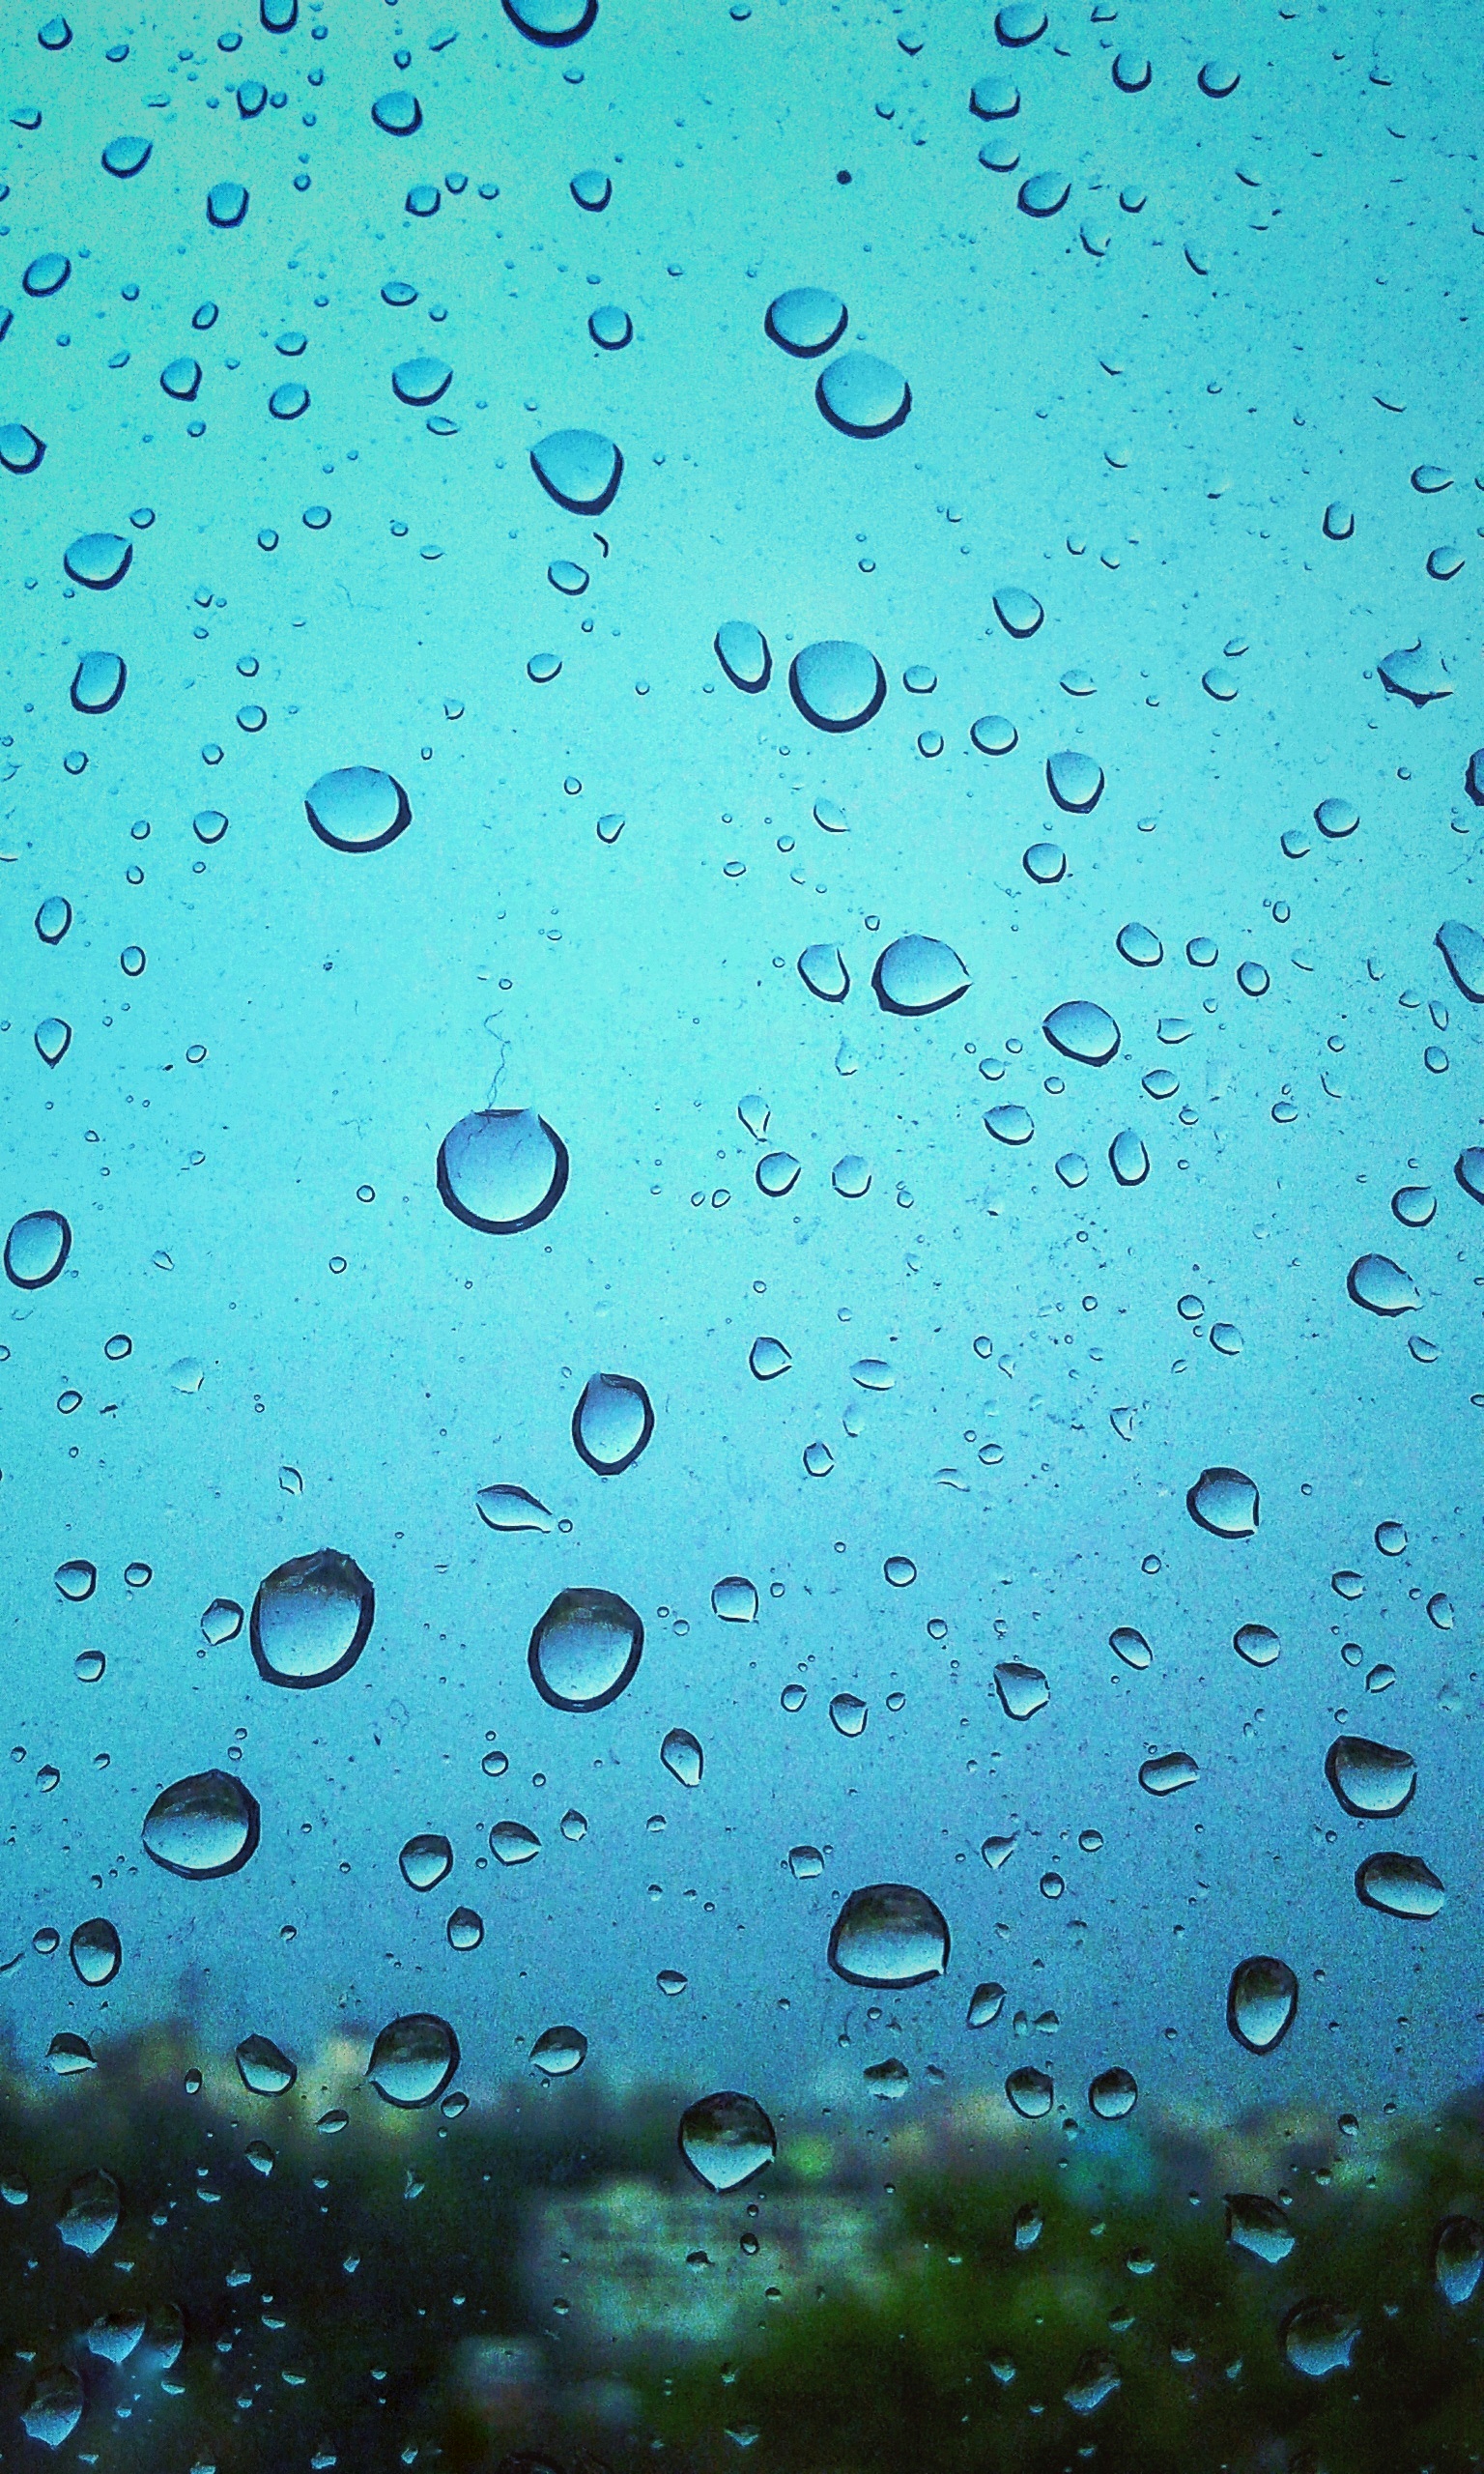 raindrop on a glass window